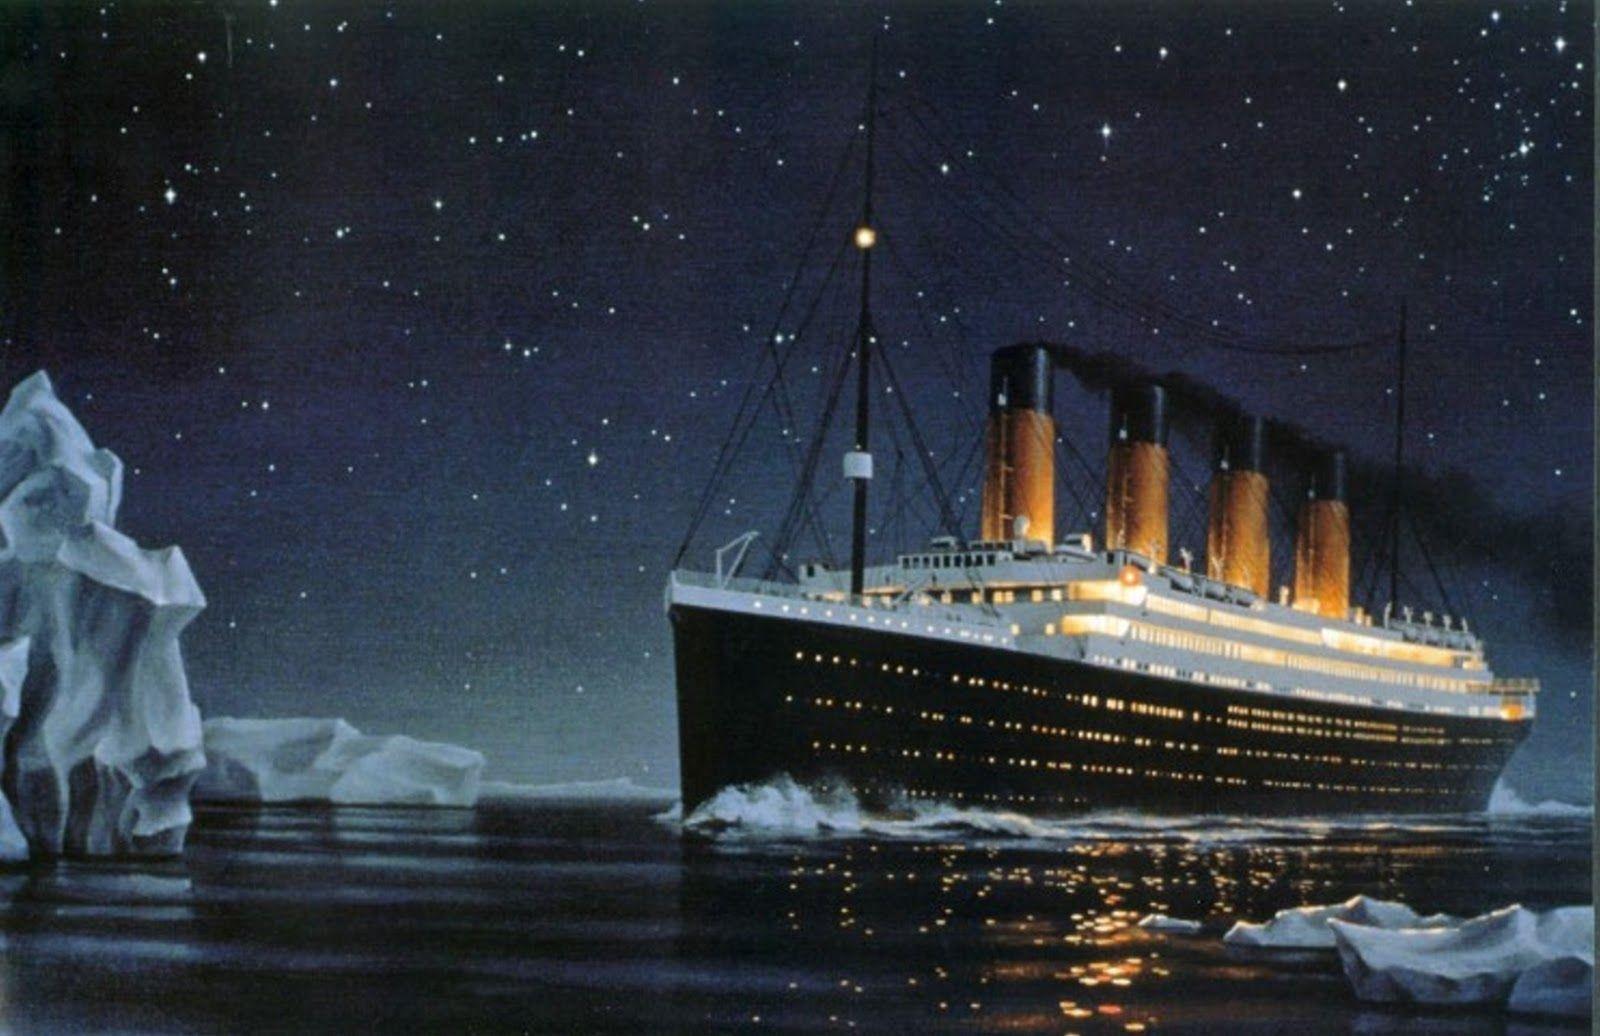 Wallpaper Of Titanic